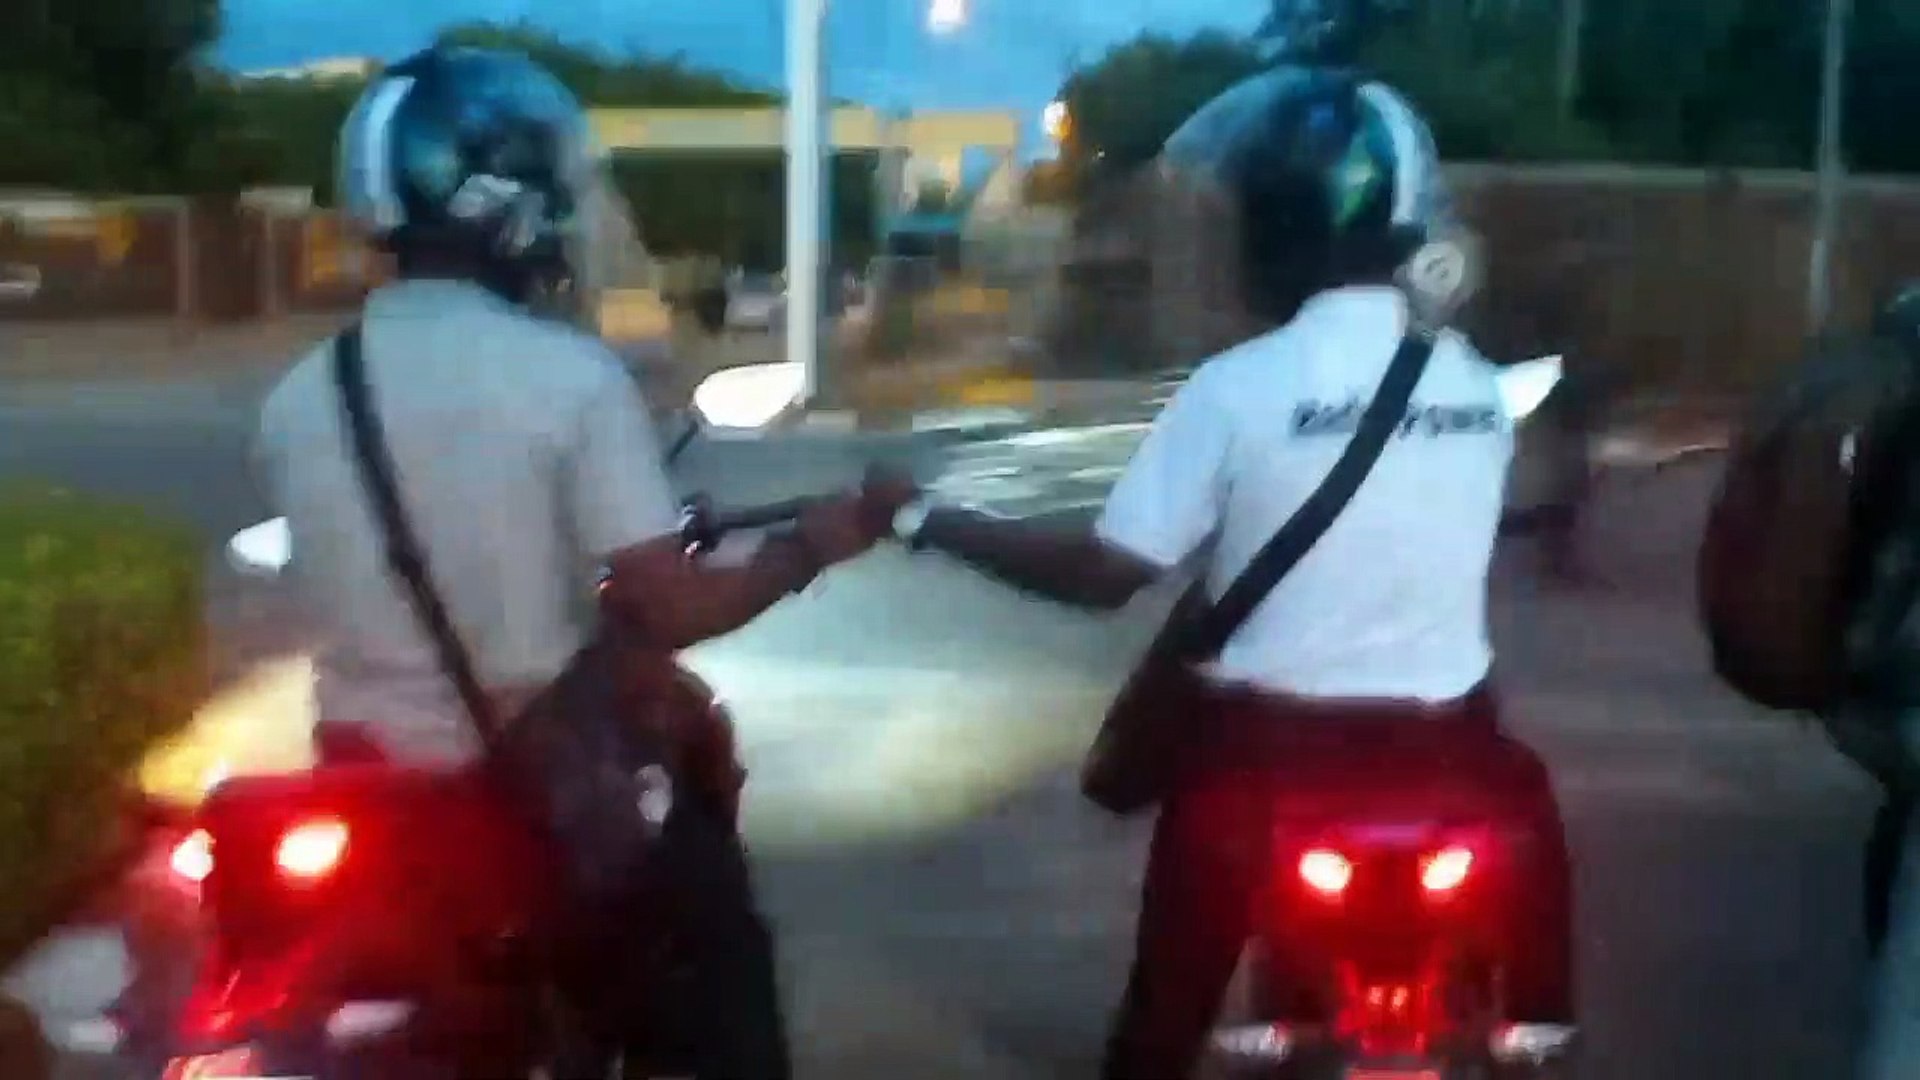 Tuto pratique moto - Ecran antibuée pour casque moto - Vidéo Dailymotion